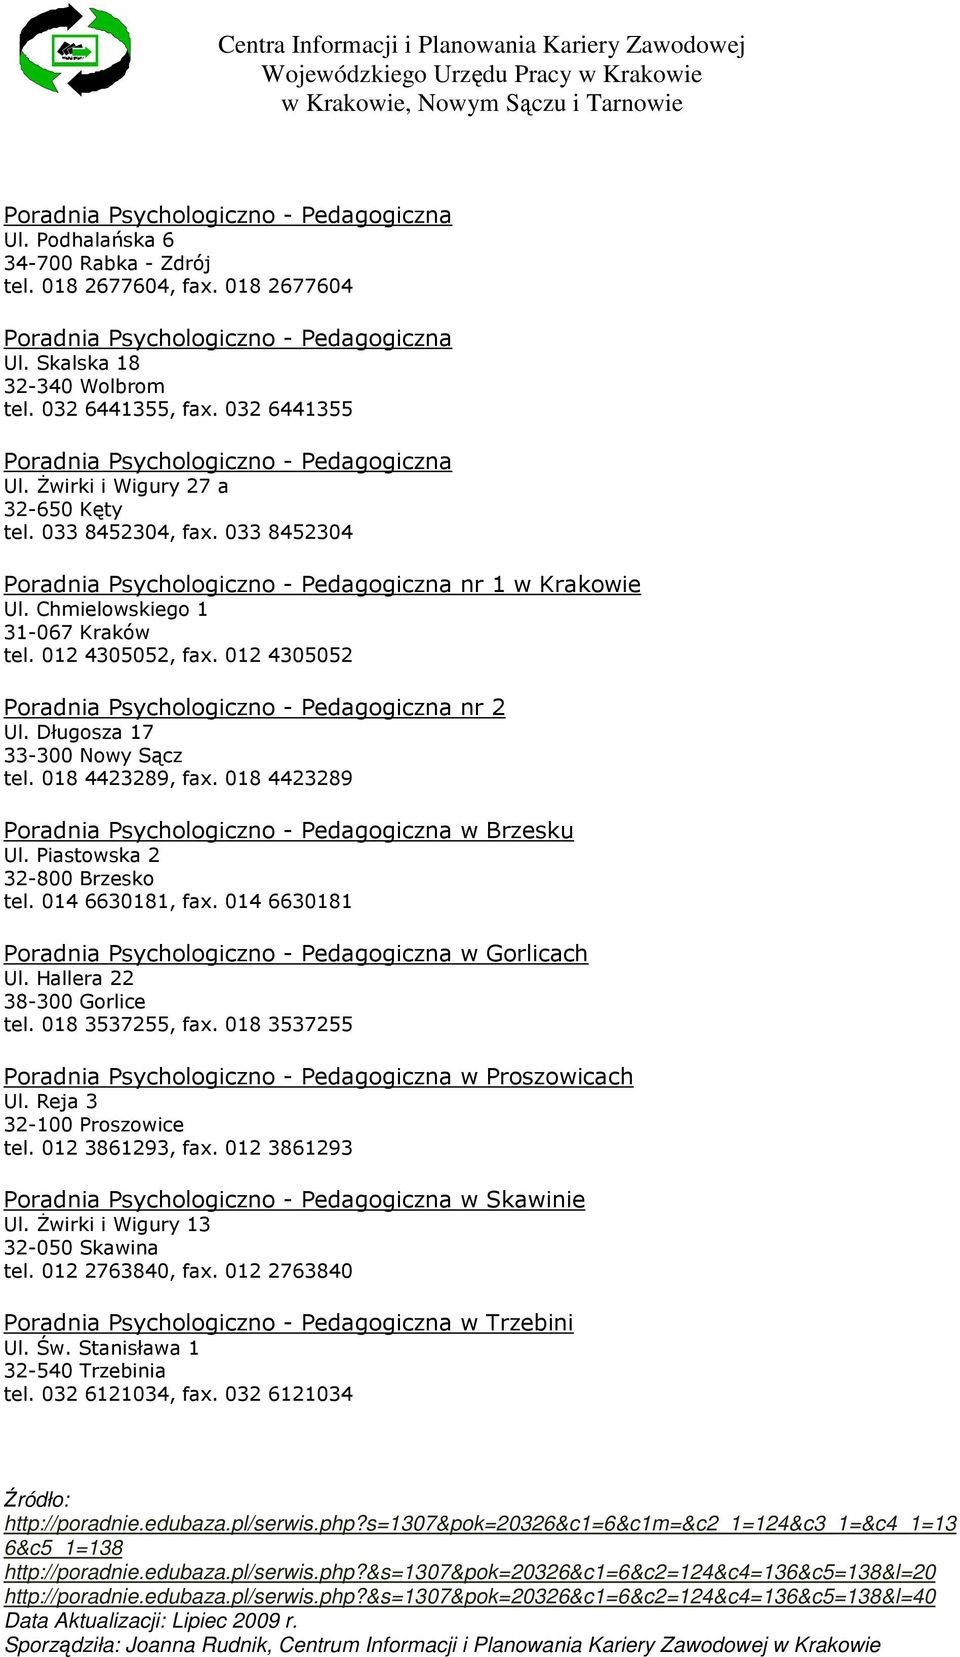 Piastowska 2 32-800 Brzesko tel. 014 6630181, fax. 014 6630181 w Gorlicach Ul. Hallera 22 38-300 Gorlice tel. 018 3537255, fax. 018 3537255 w Proszowicach Ul. Reja 3 32-100 Proszowice tel.